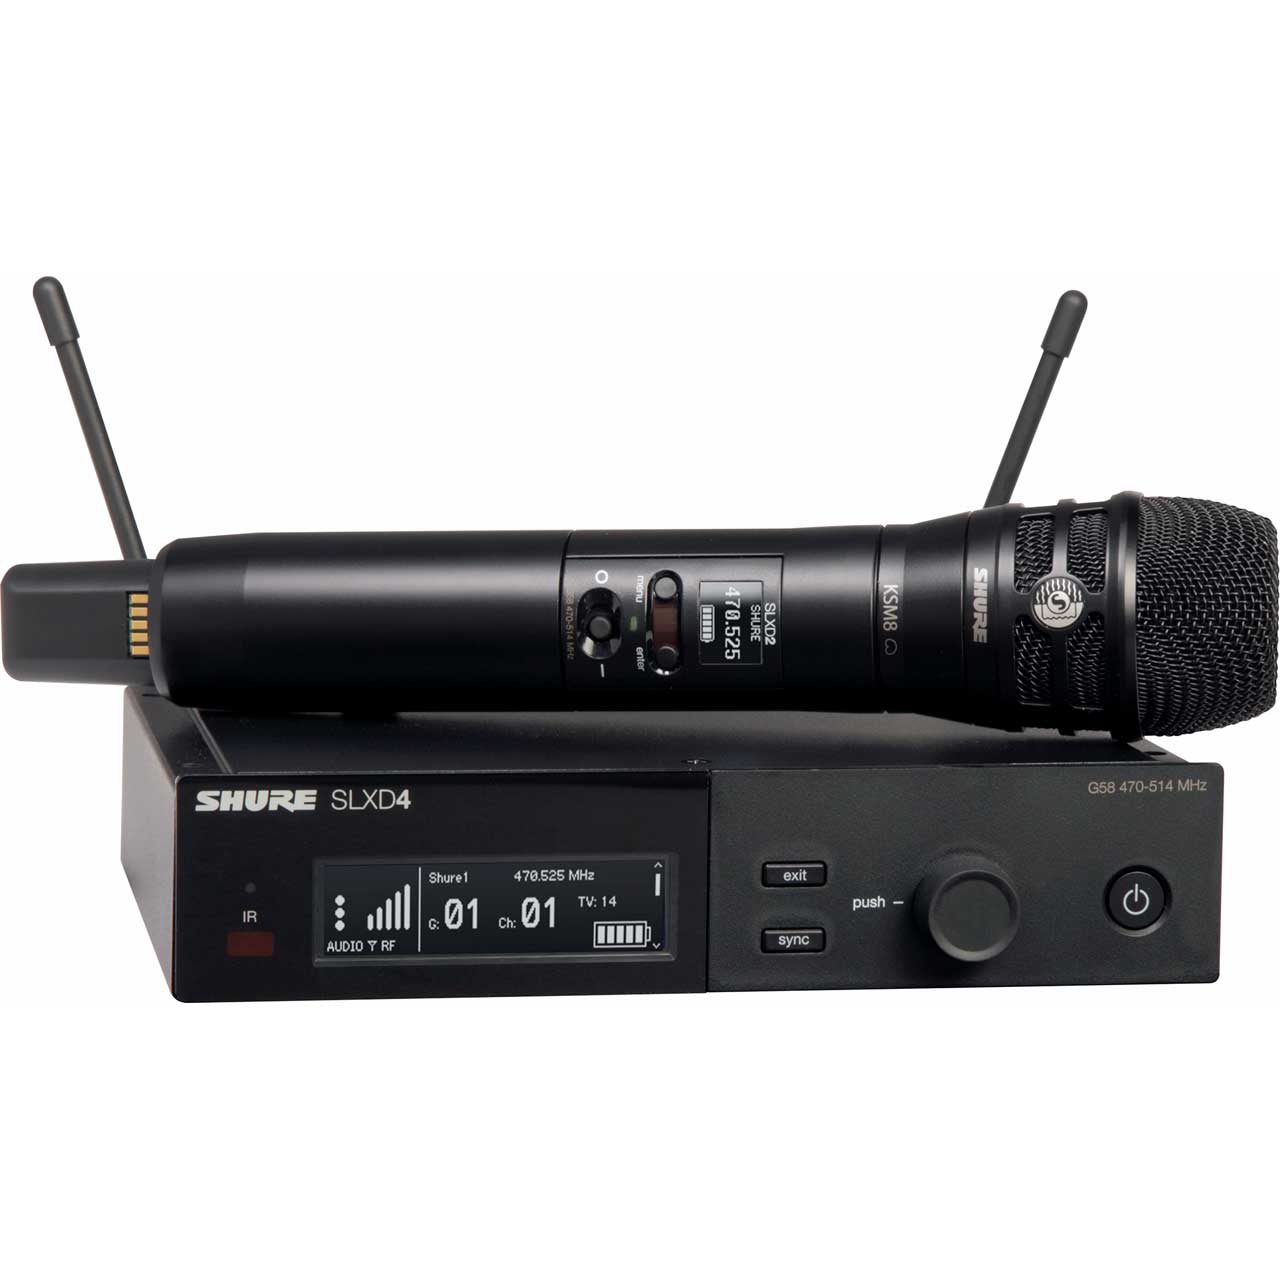 SHURE KSM8/B dualdyne dynamic microphone